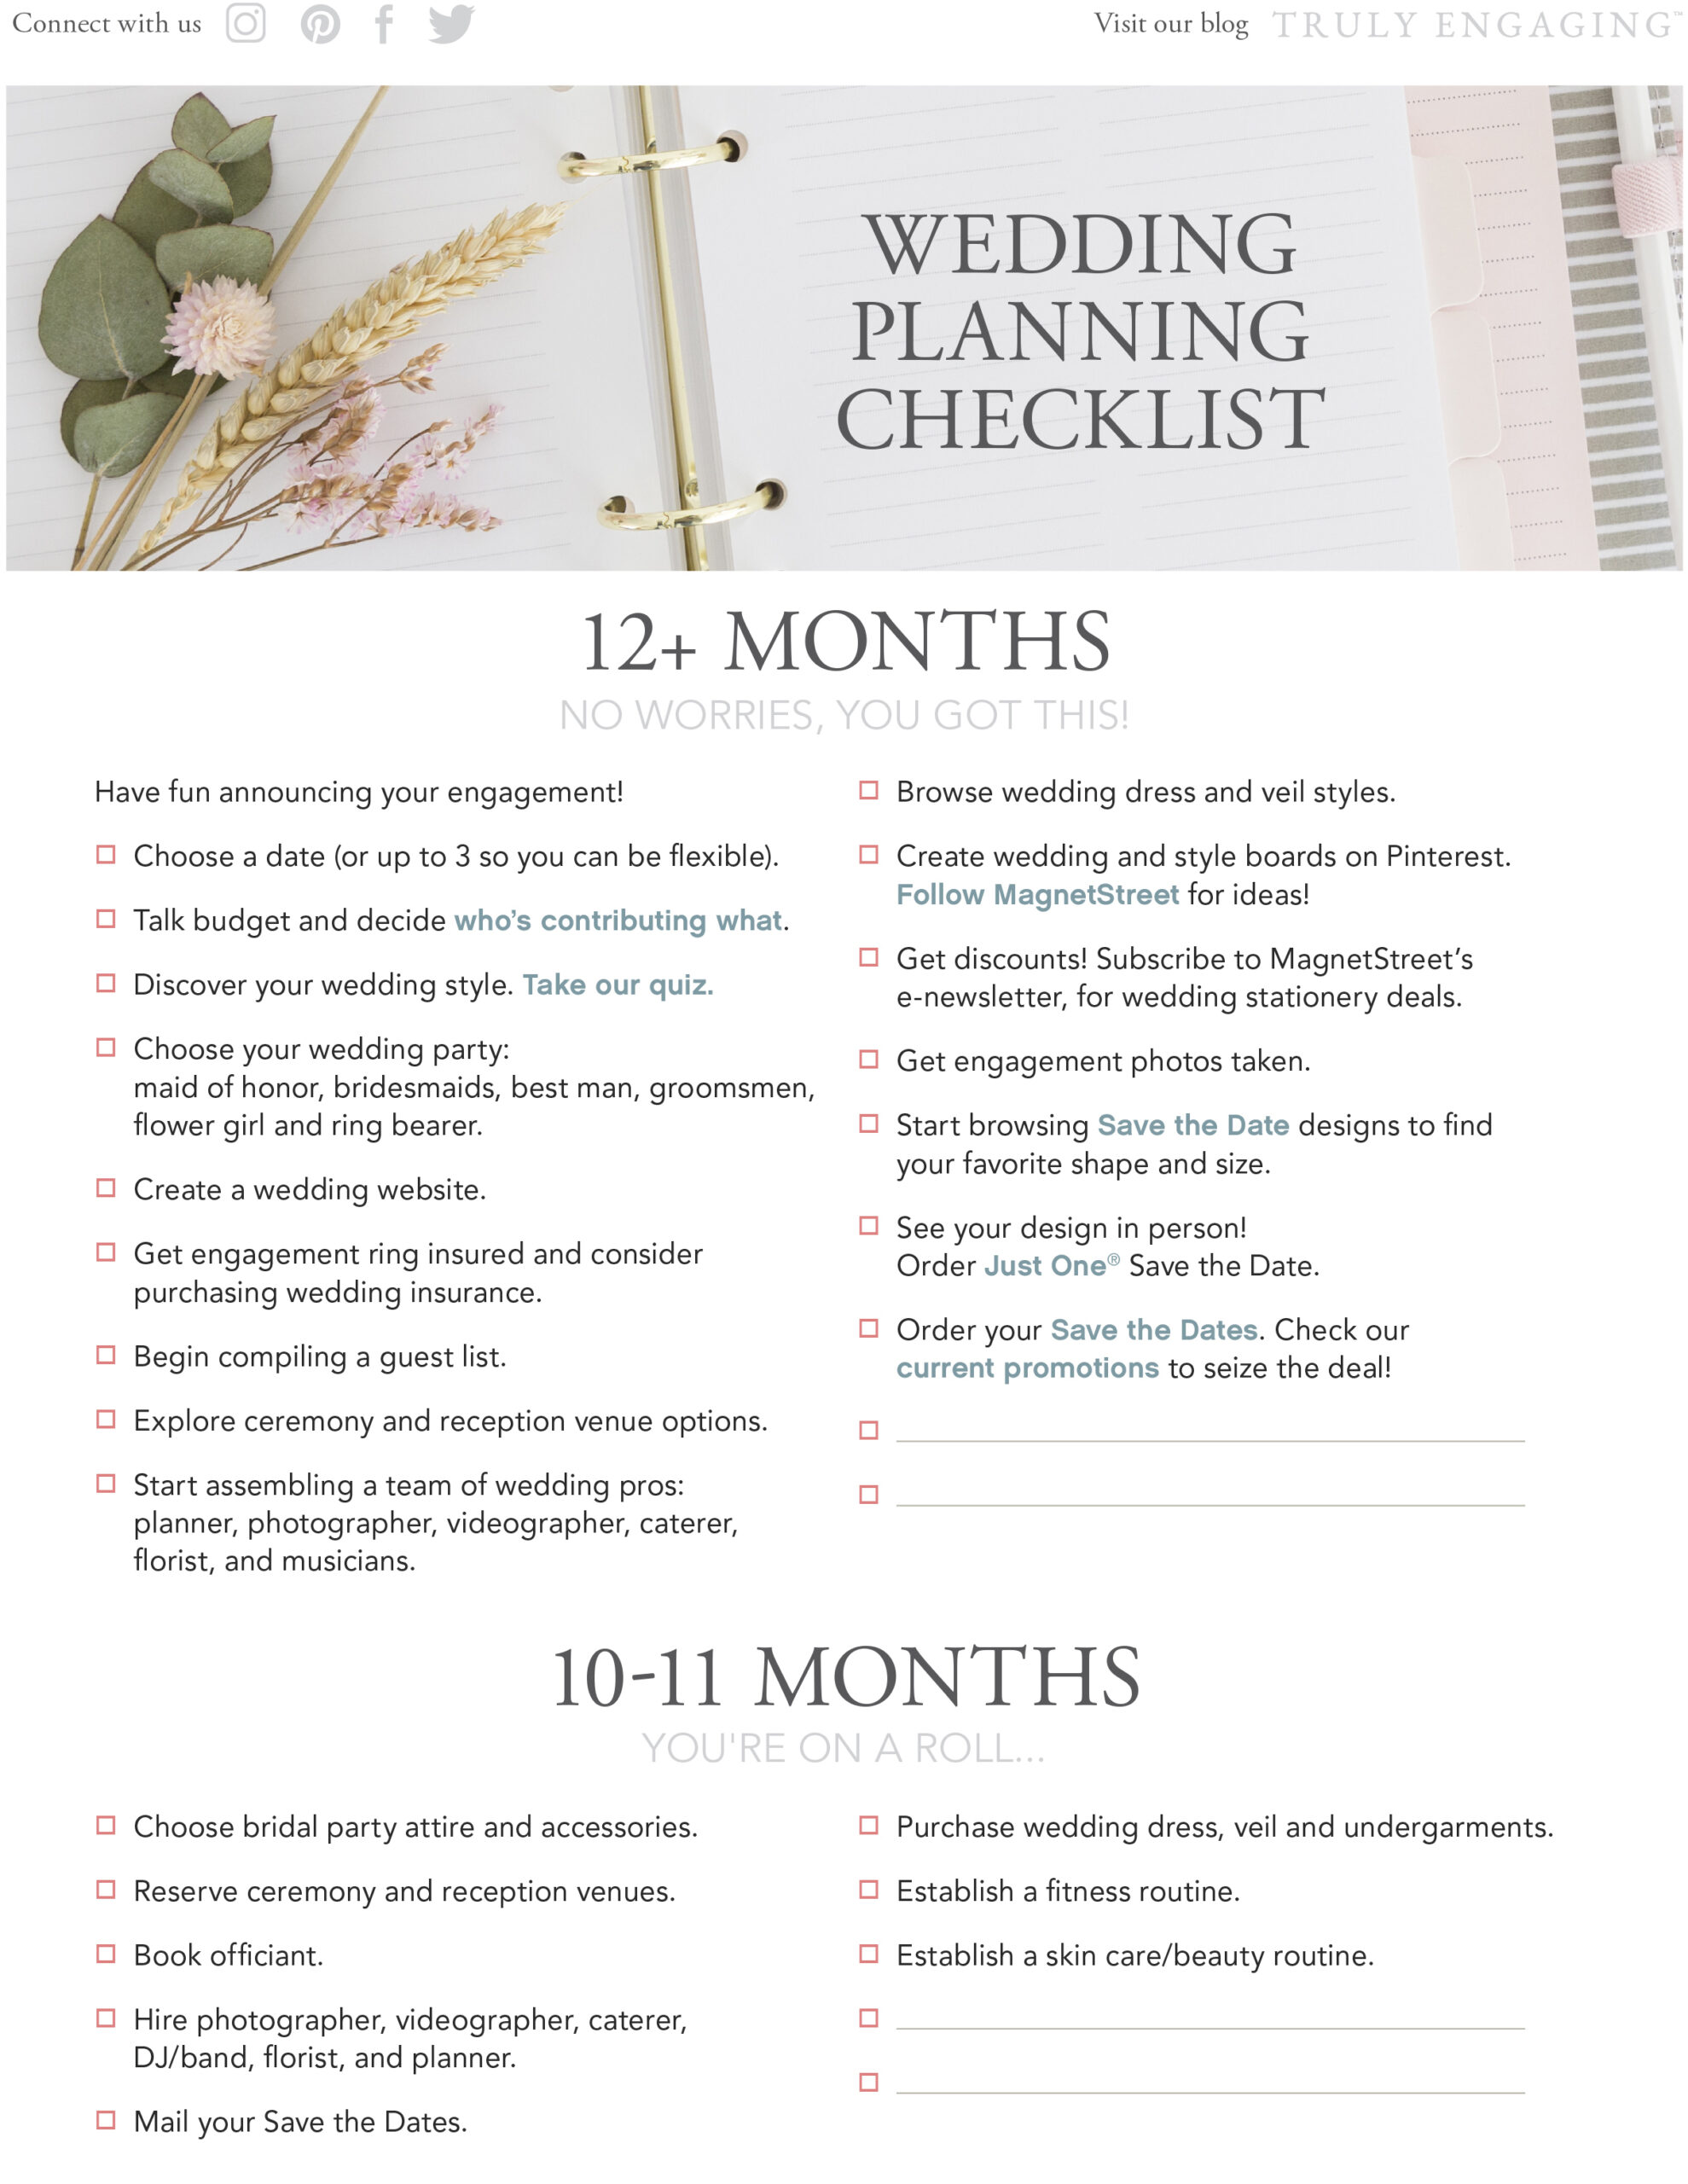 Free Wedding Planning Checklist  Printable Timeline Guide  Intended For Wedding Timeline Checklist Template Intended For Wedding Timeline Checklist Template